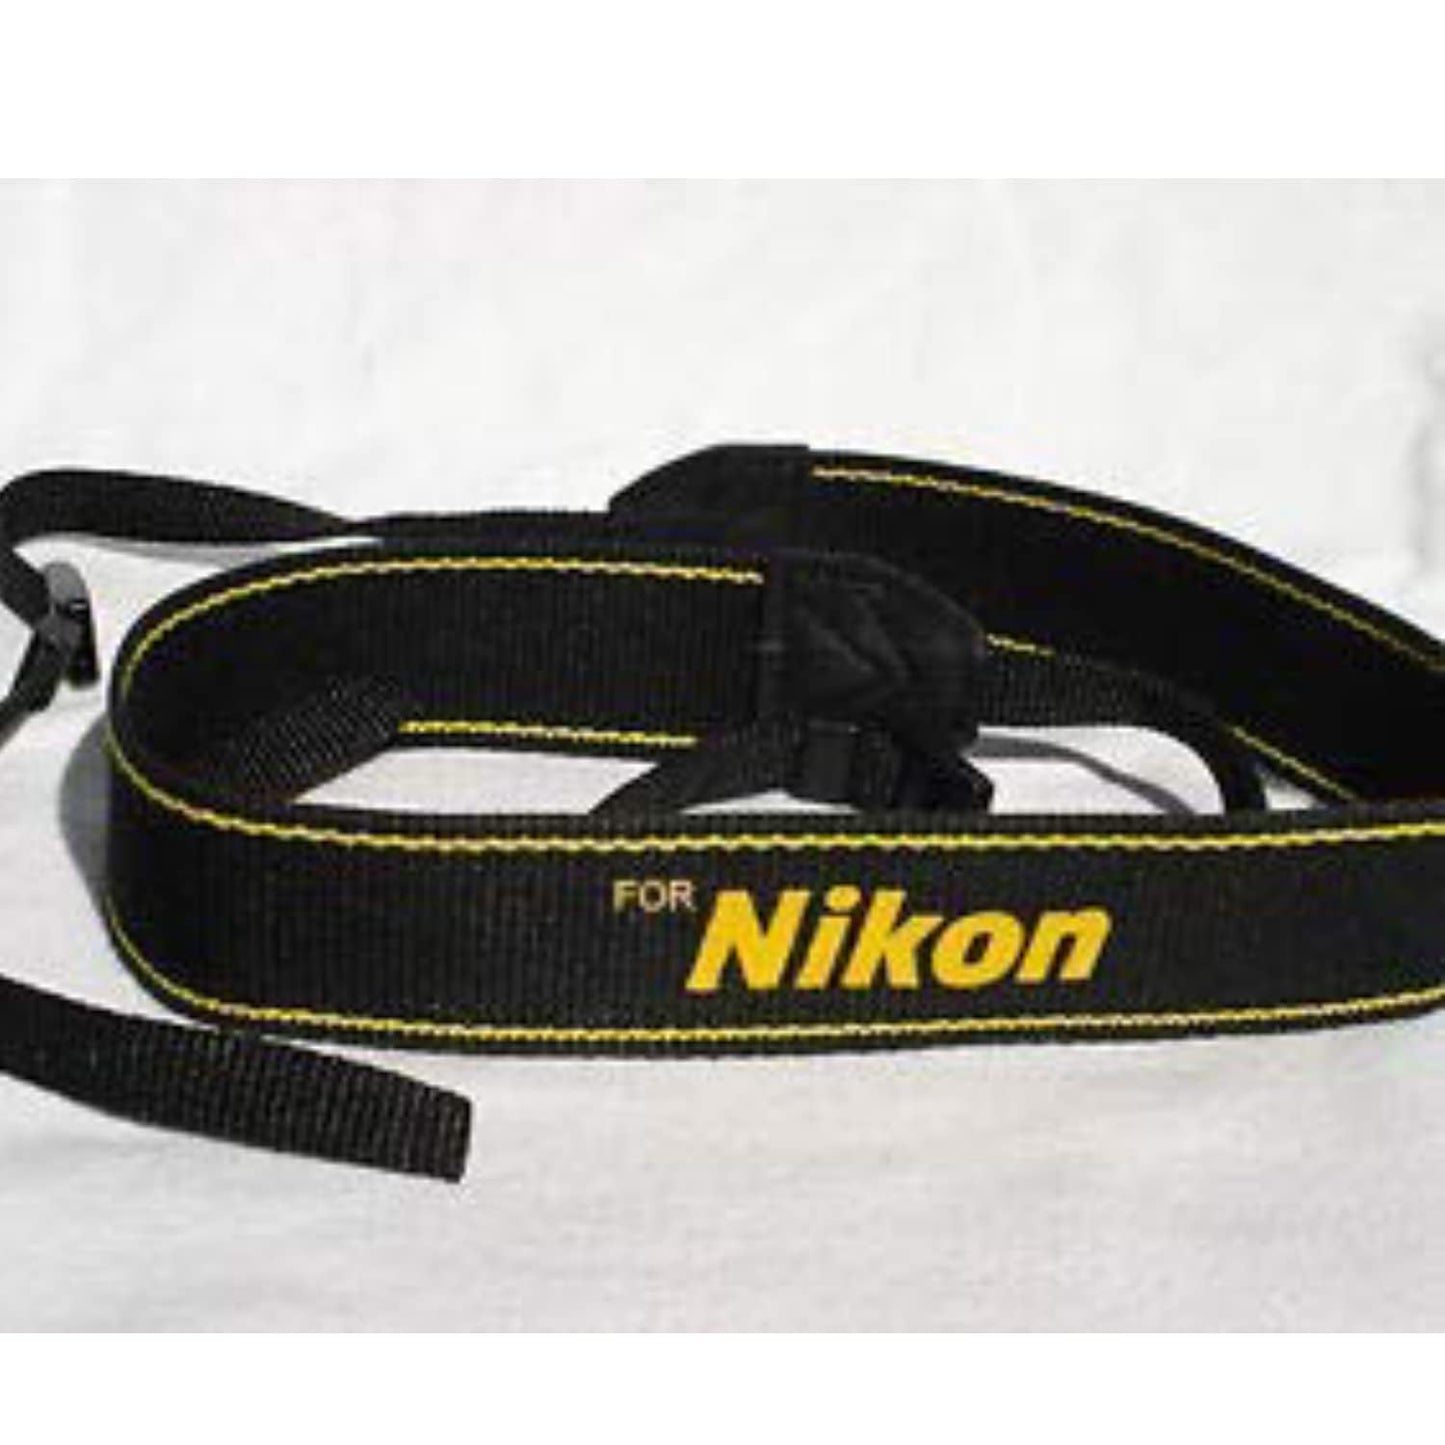 EYUVAA Nikon Camera Belt Digital DSLR Camera Shoulder Neck Strap for Nikon with Microfiber cloth